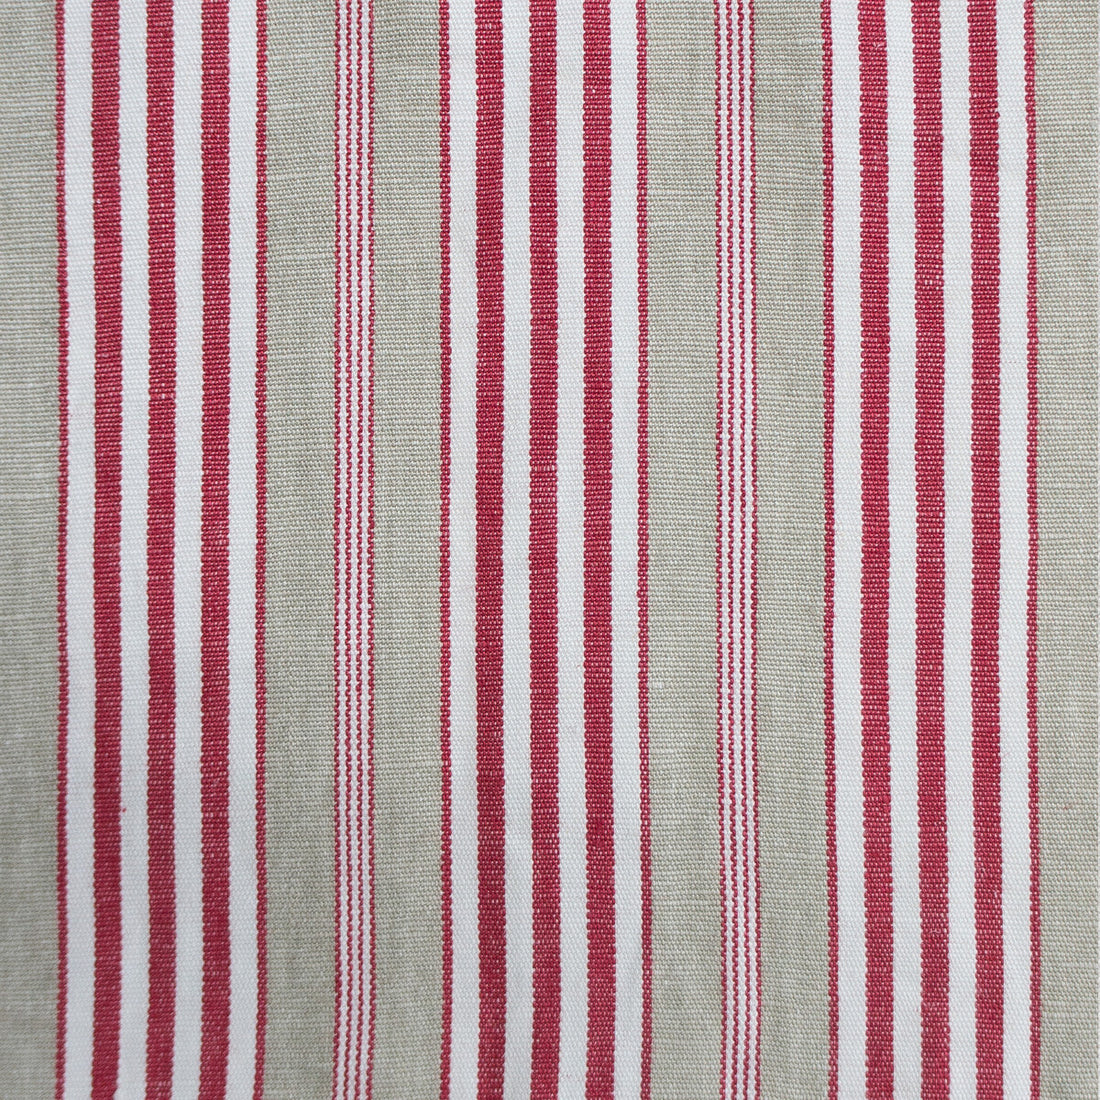 Hamptons fabric in rojo/lino color - pattern GDT5561.001.0 - by Gaston y Daniela in the Gaston Luis Bustamante collection